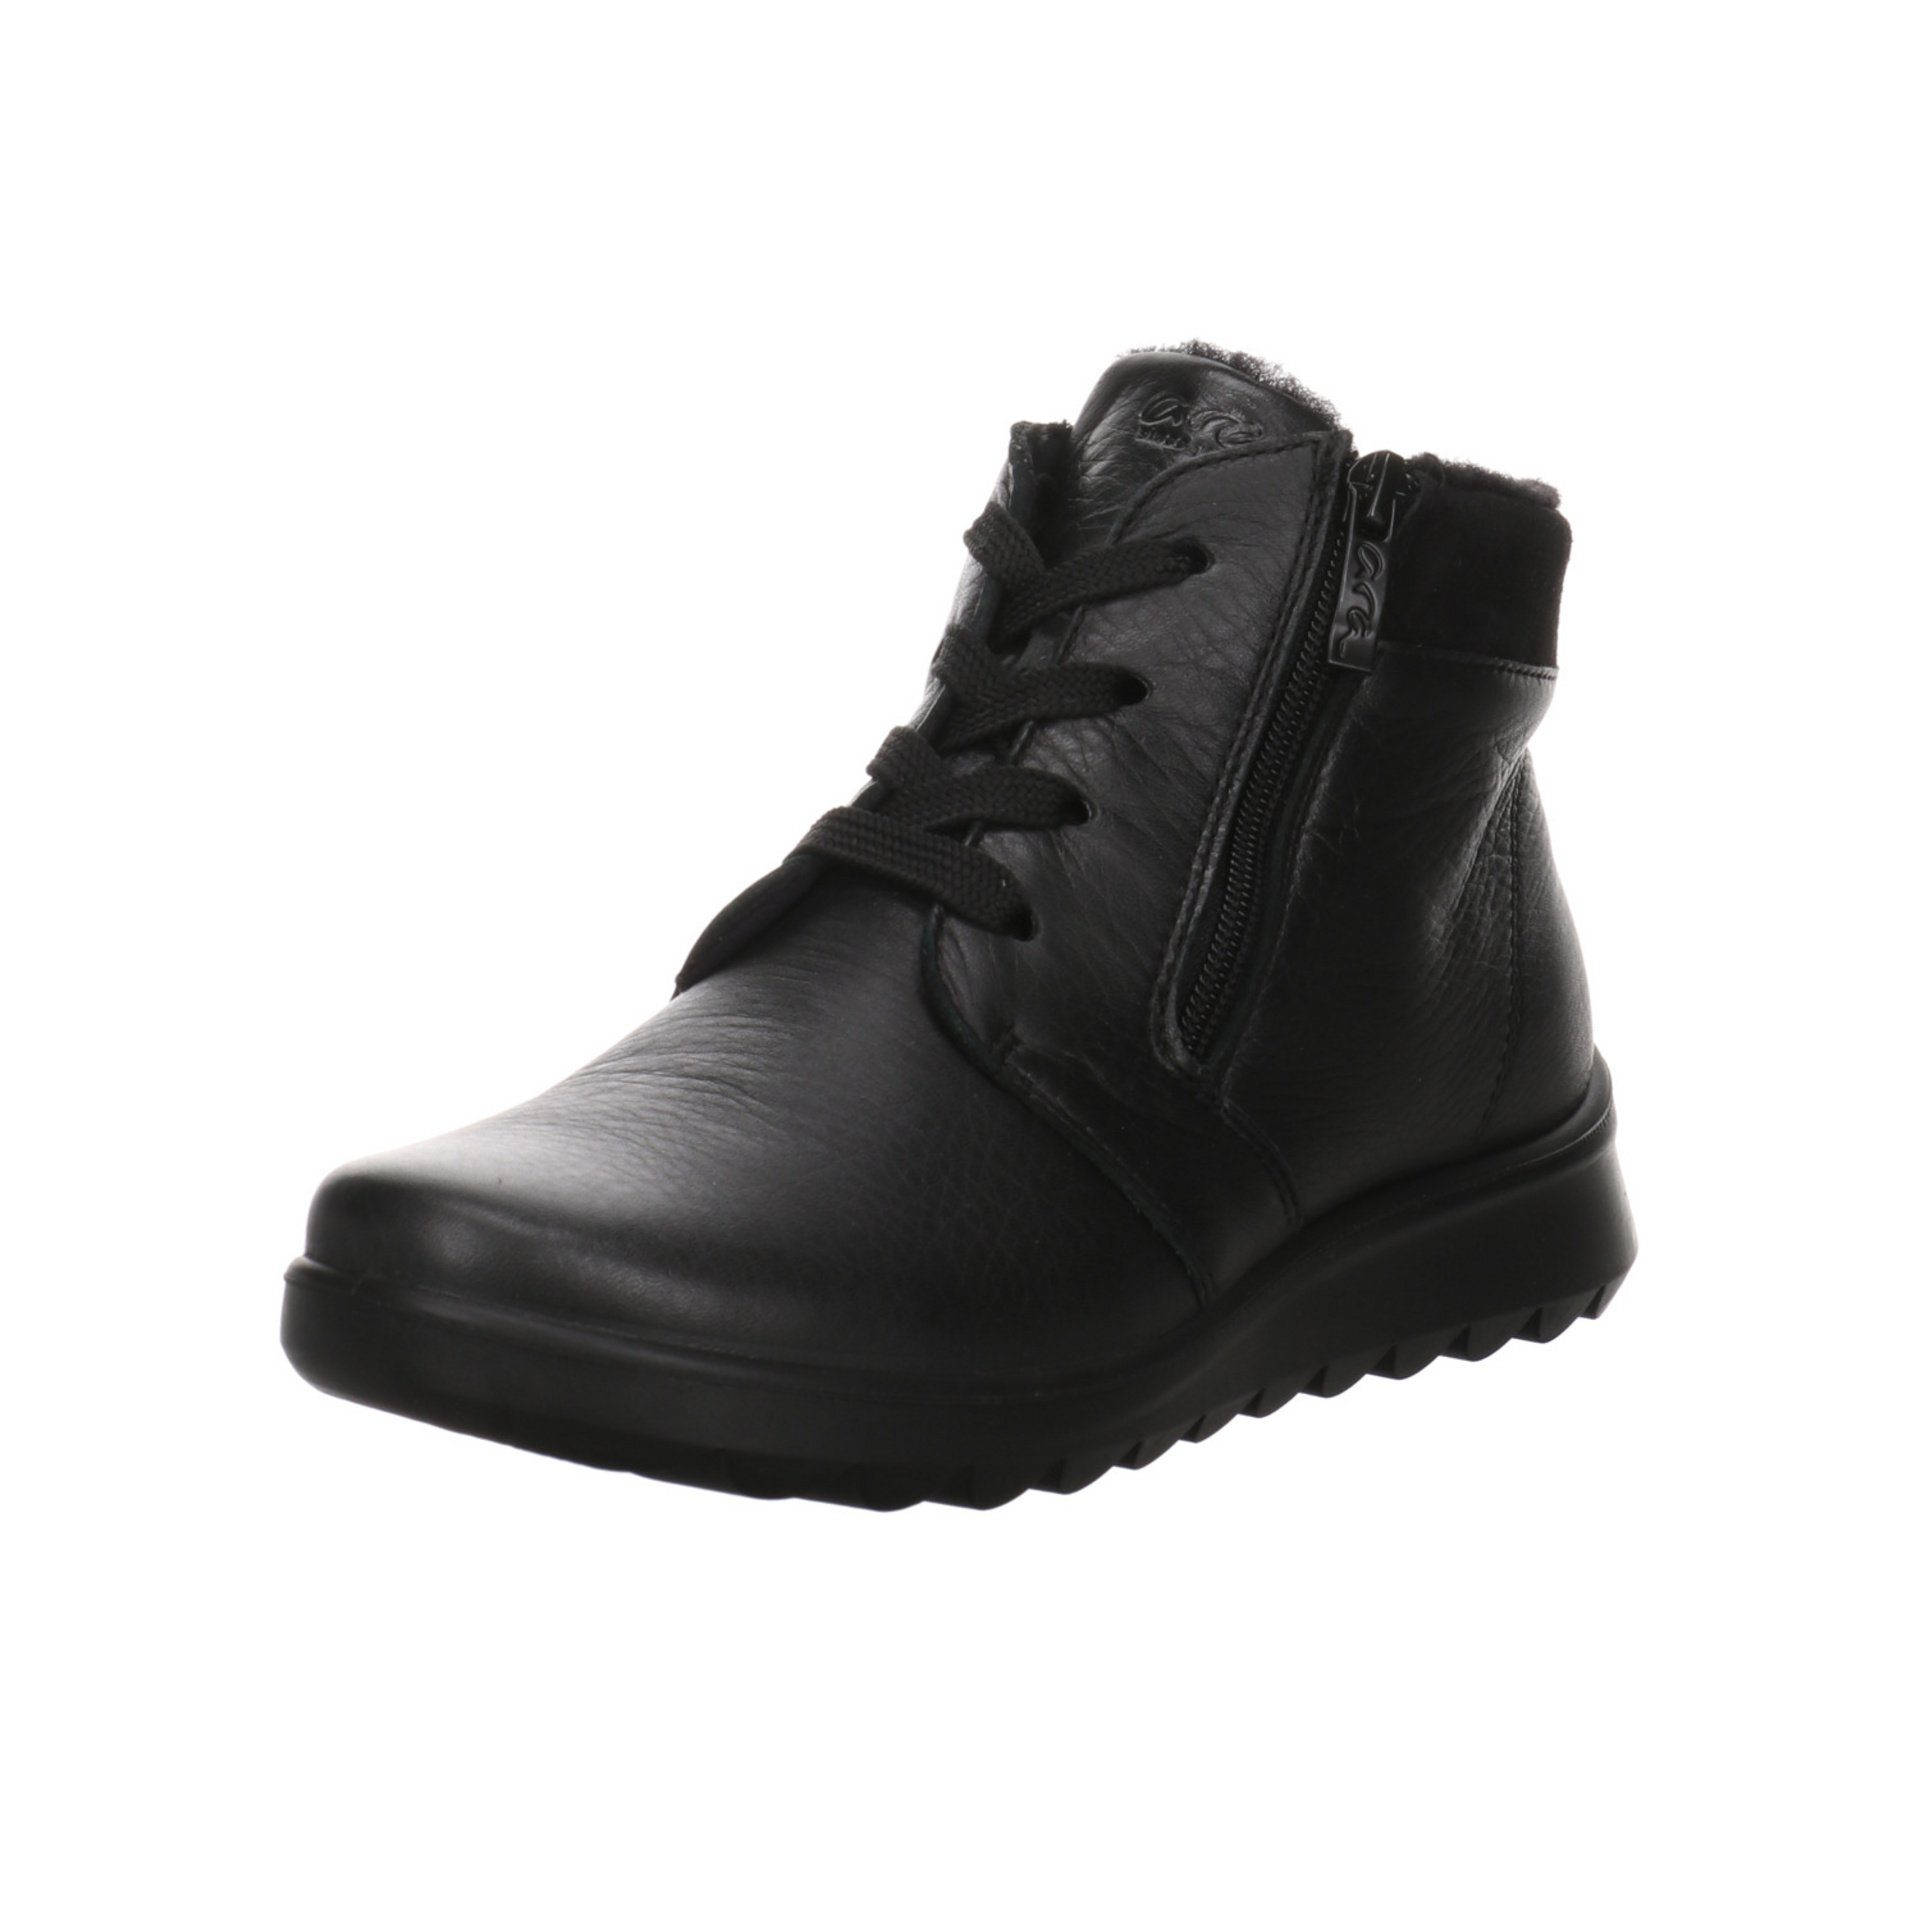 Ara Damen Stiefel Schuhe Toronto Boots Stiefelette Lederkombination schwarz 046874